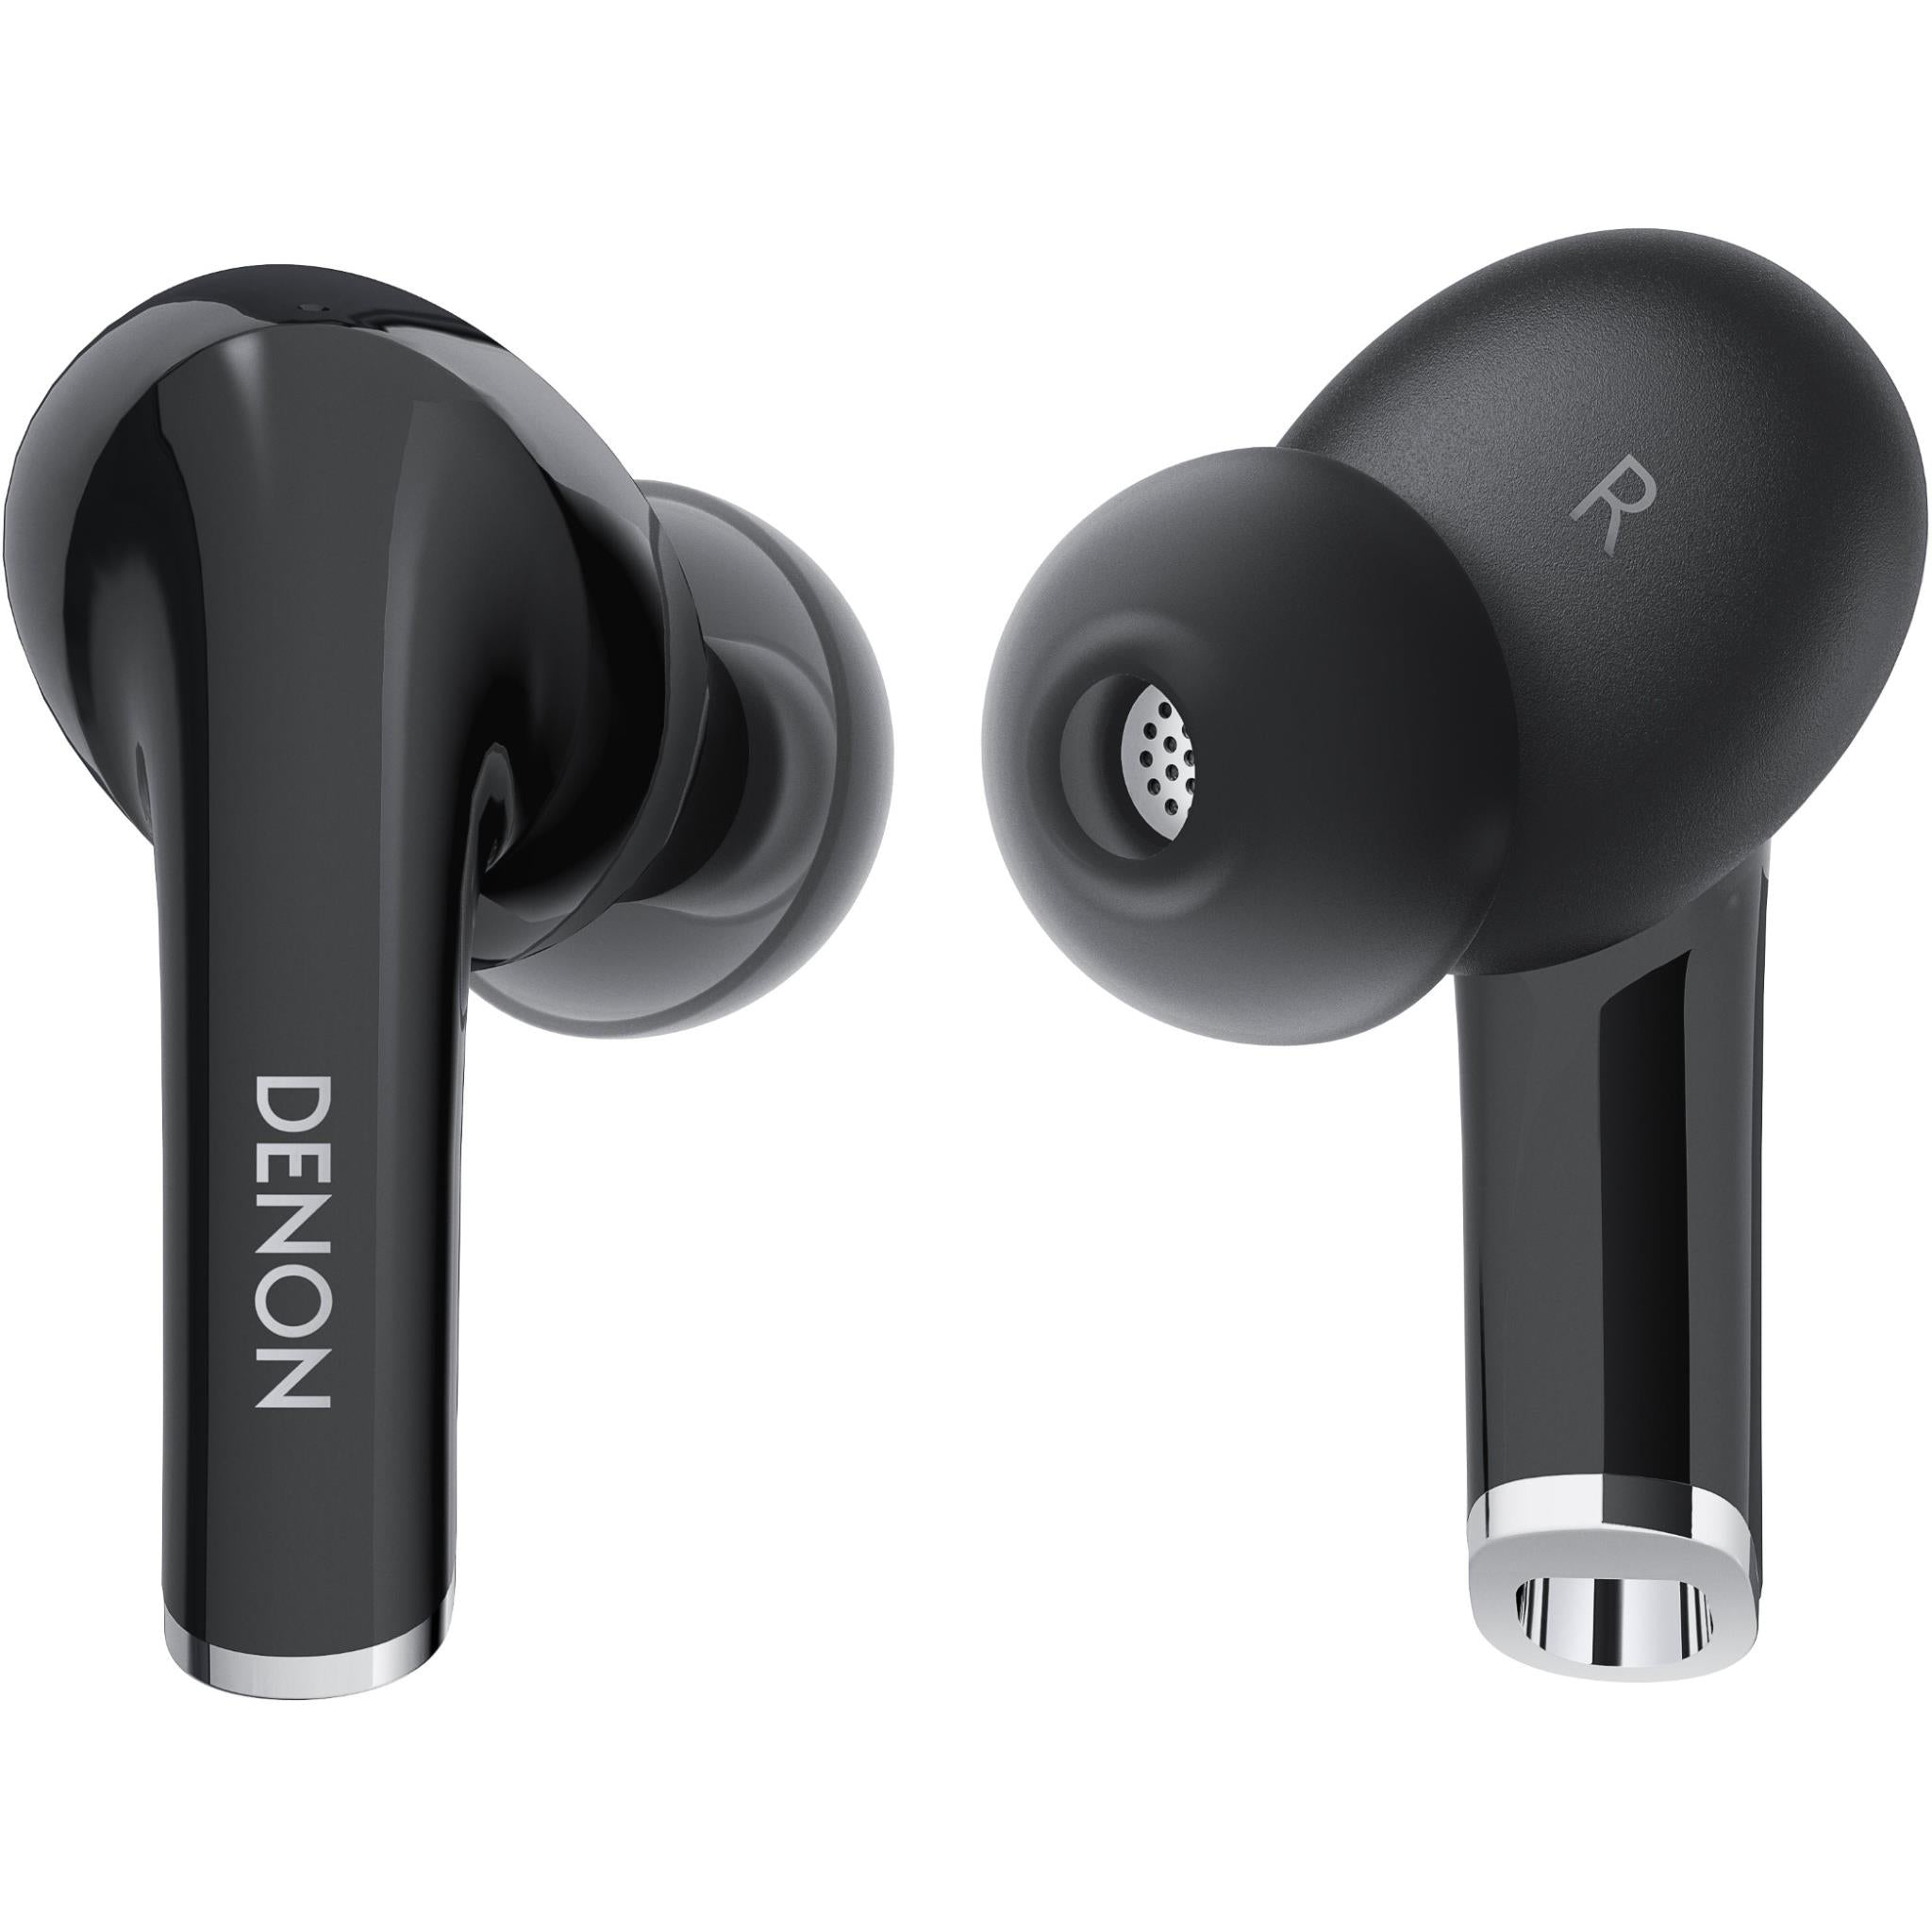 denon true wirless noise cancelling in-ear headphones (black)